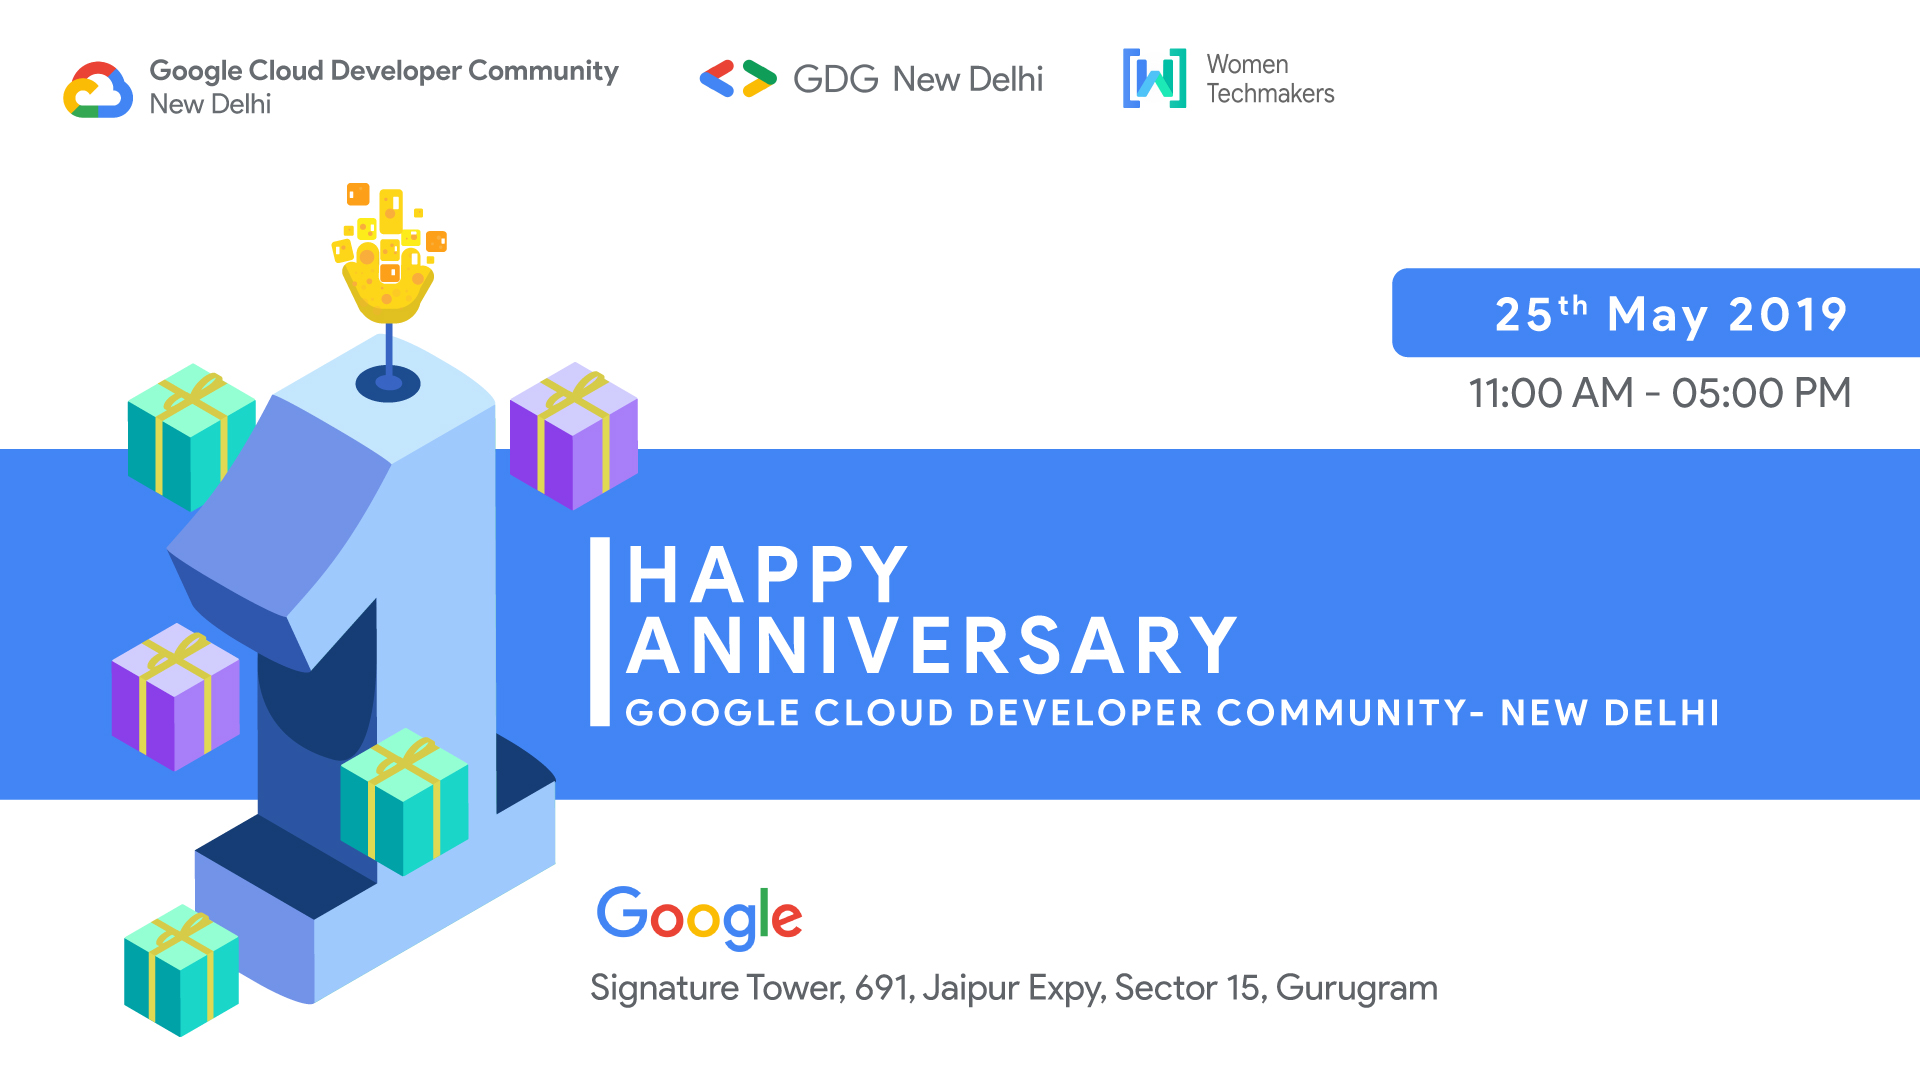 Google Cloud Developer Community Turns 1!